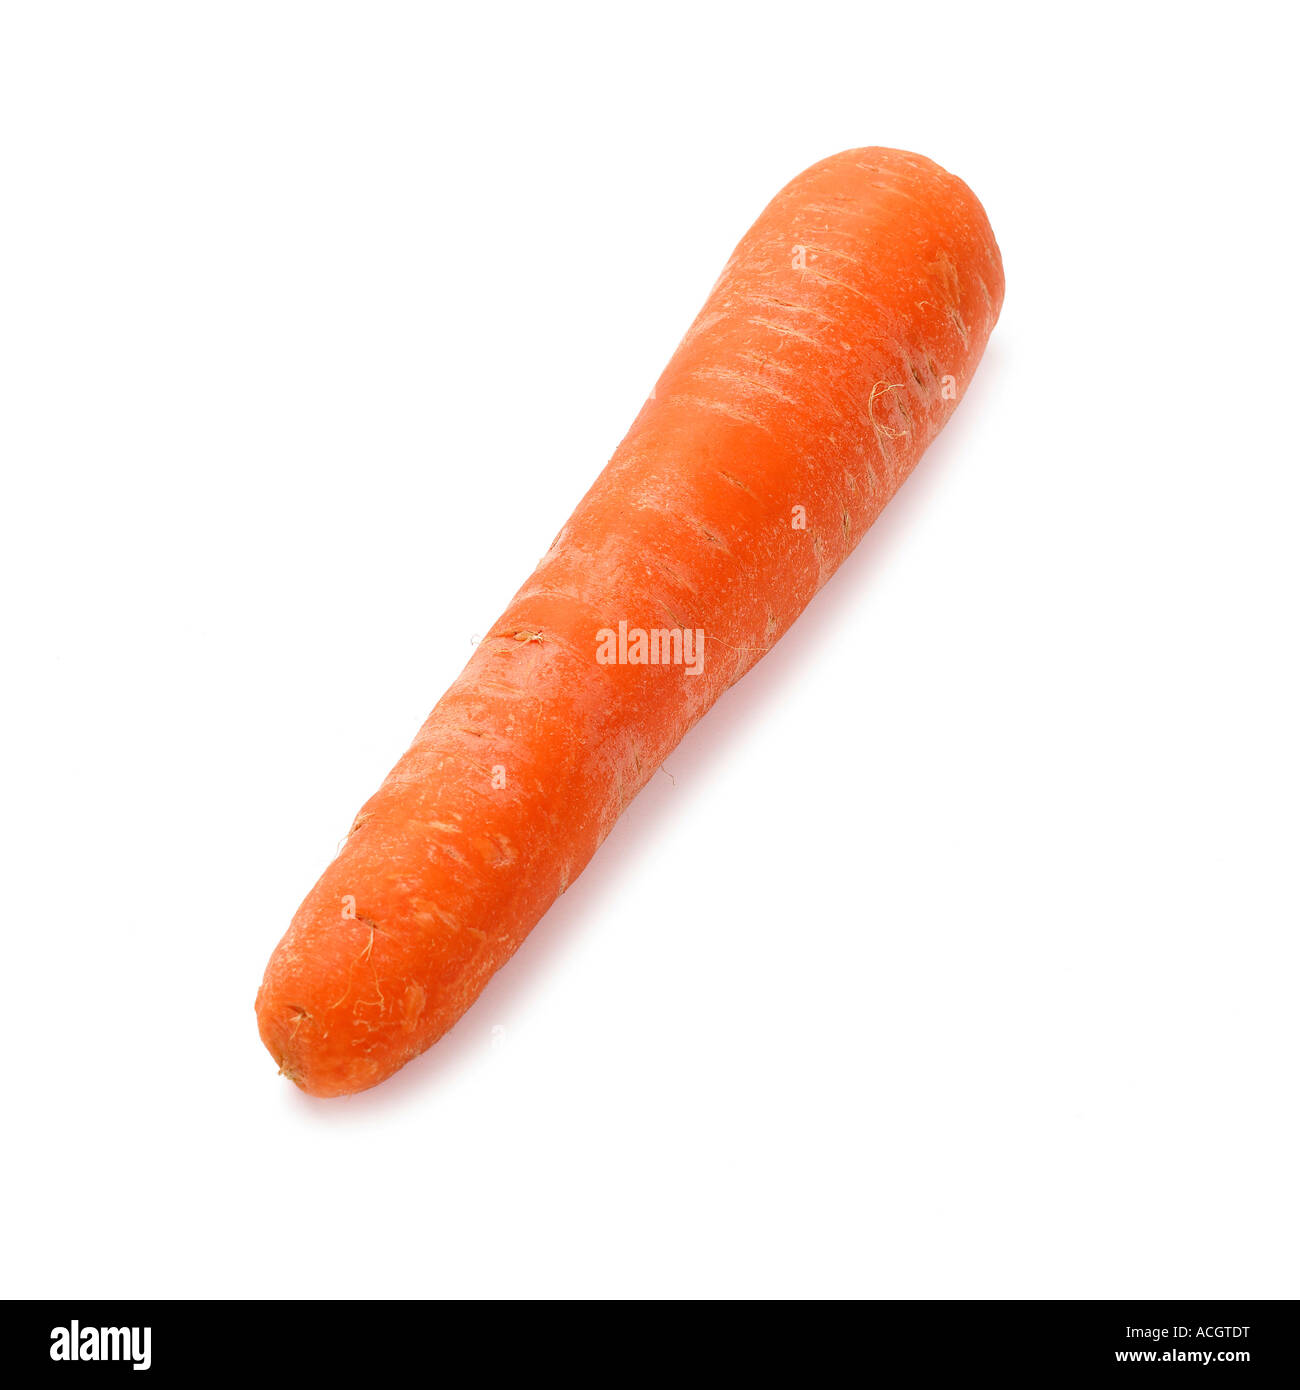 a fresh ripe carrot on a white backgound Stock Photo